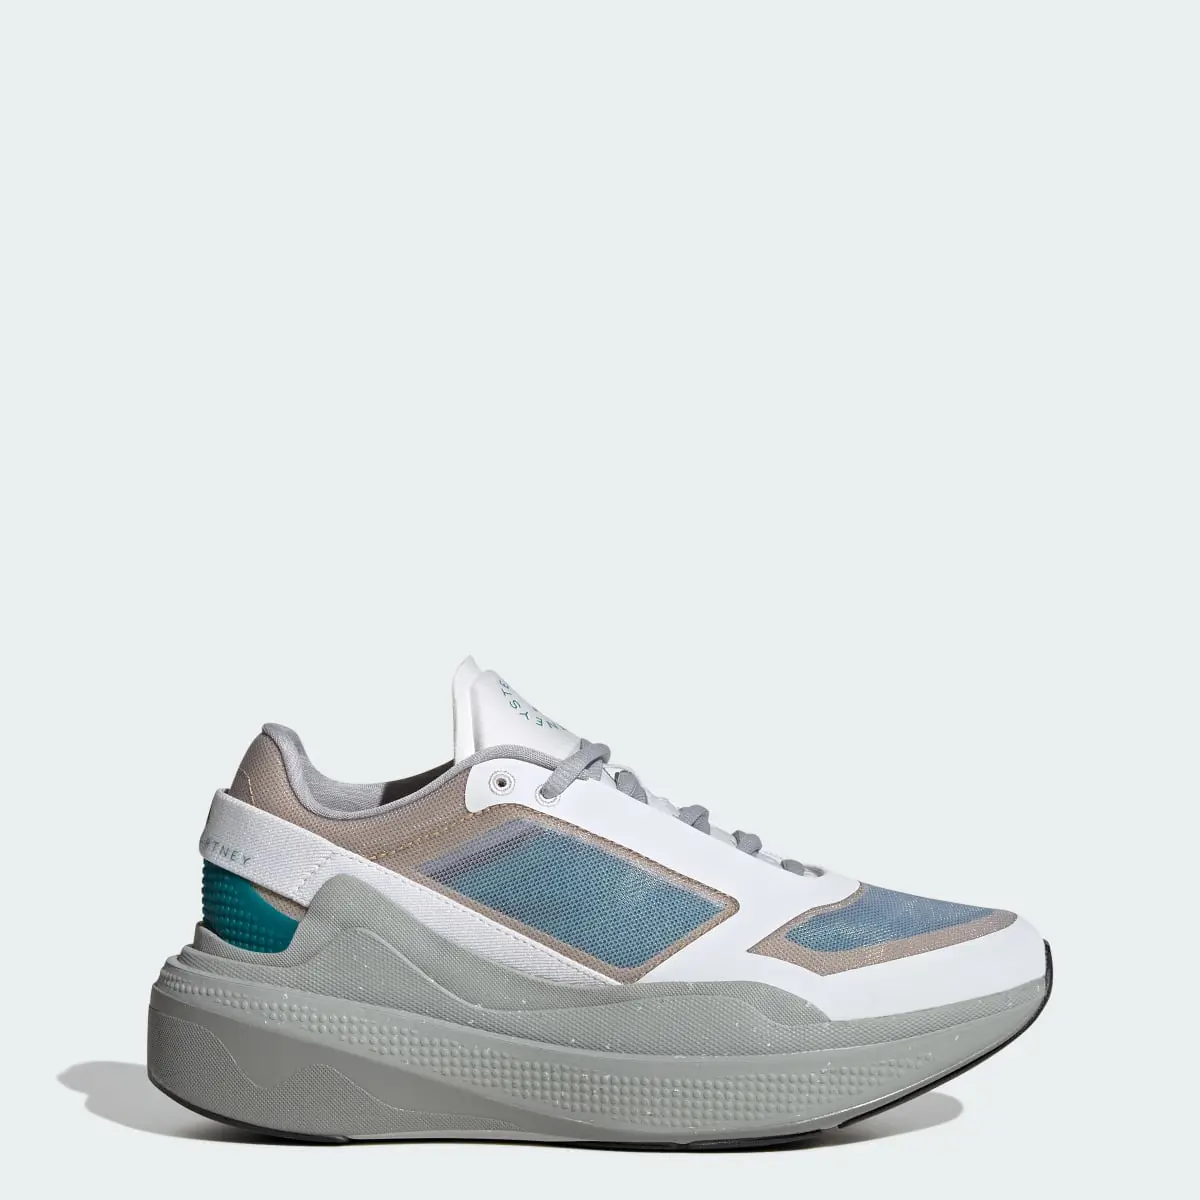 Adidas by Stella McCartney Earthlight Mesh Shoes. 1